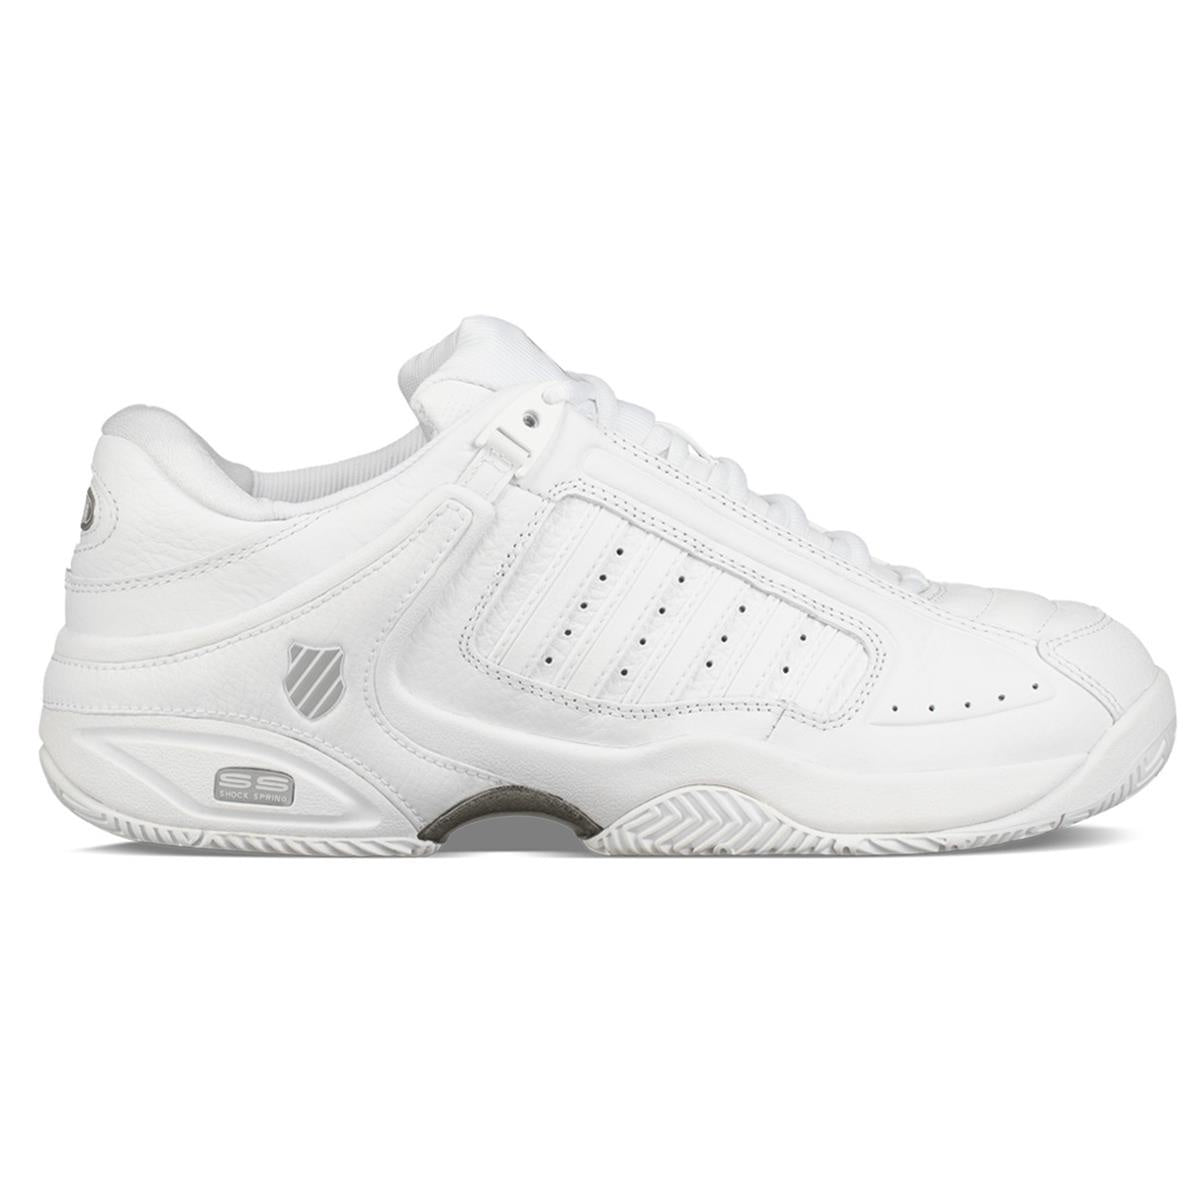 K-Swiss Defier RS Ladies Tennis Shoes - White